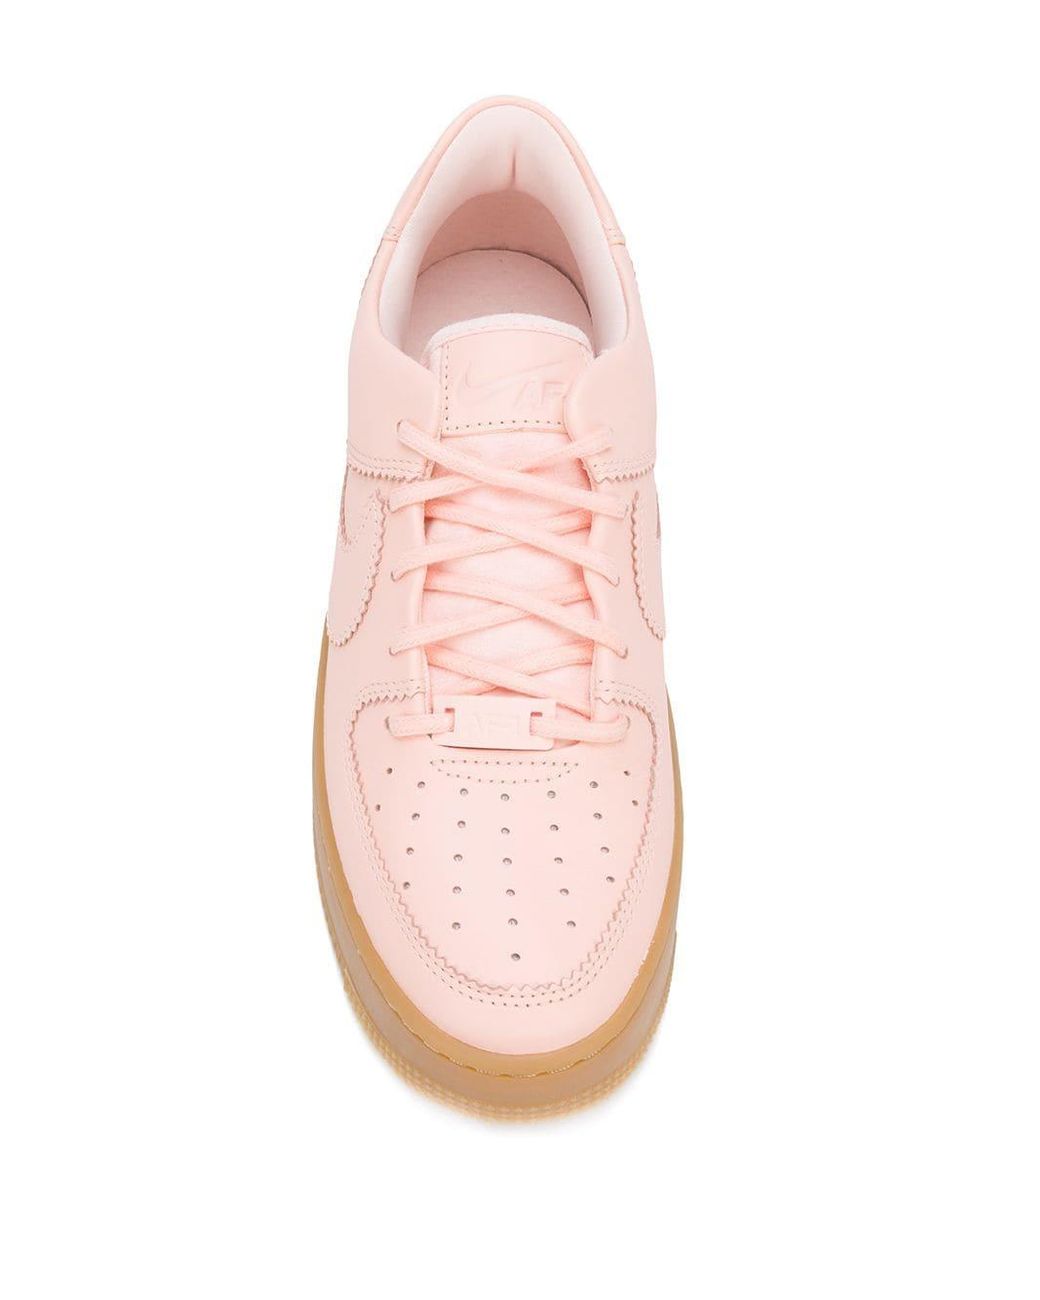 Nike Air Force 1 Sage Low Lx Sneakers in Pink | Lyst